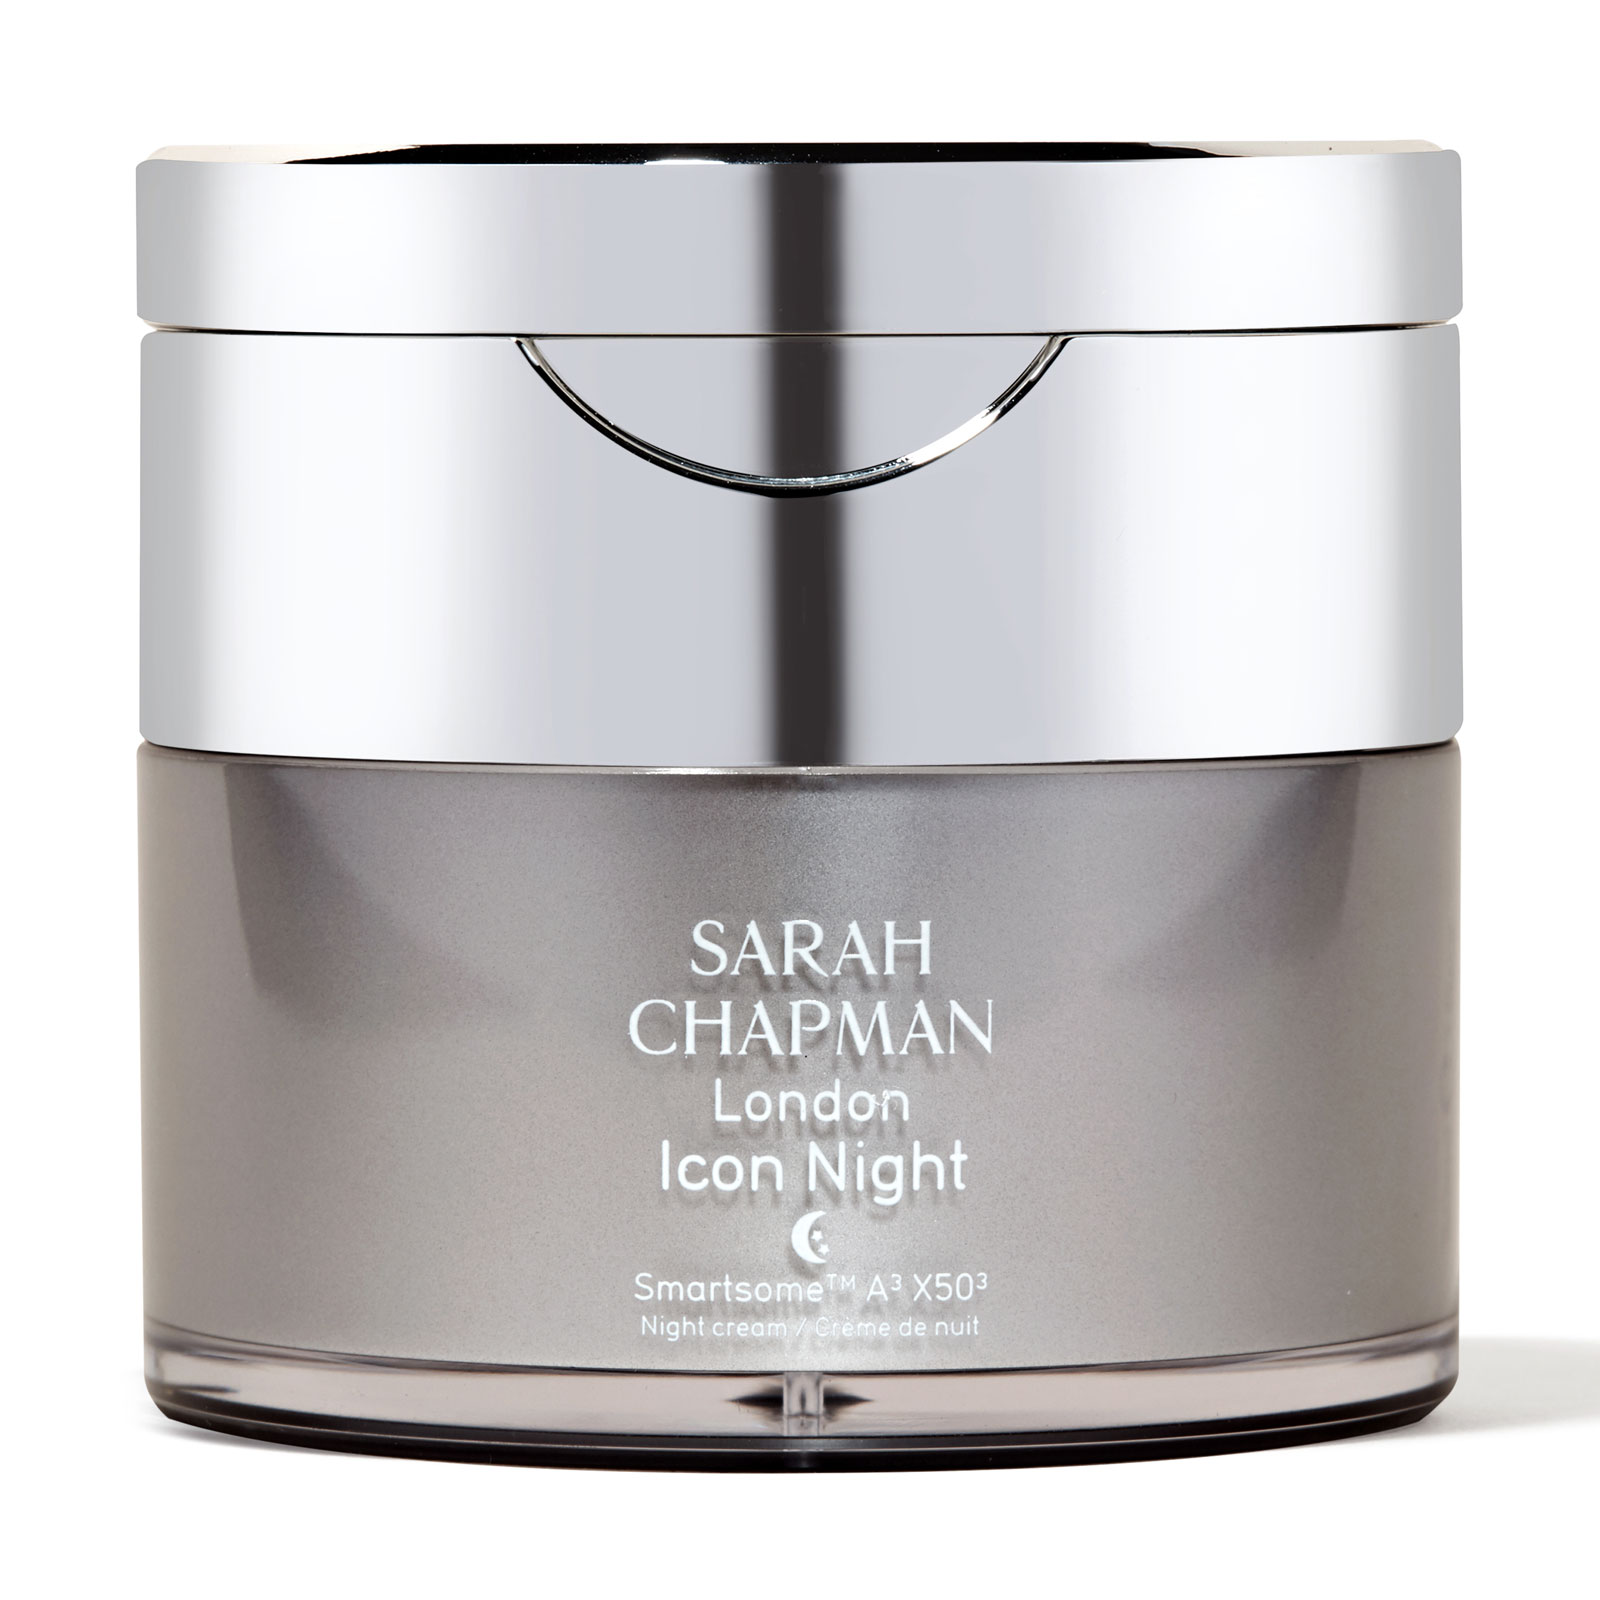 Sarah Chapman Icon Night Smartsome A3 X503 Night Cream 30Ml